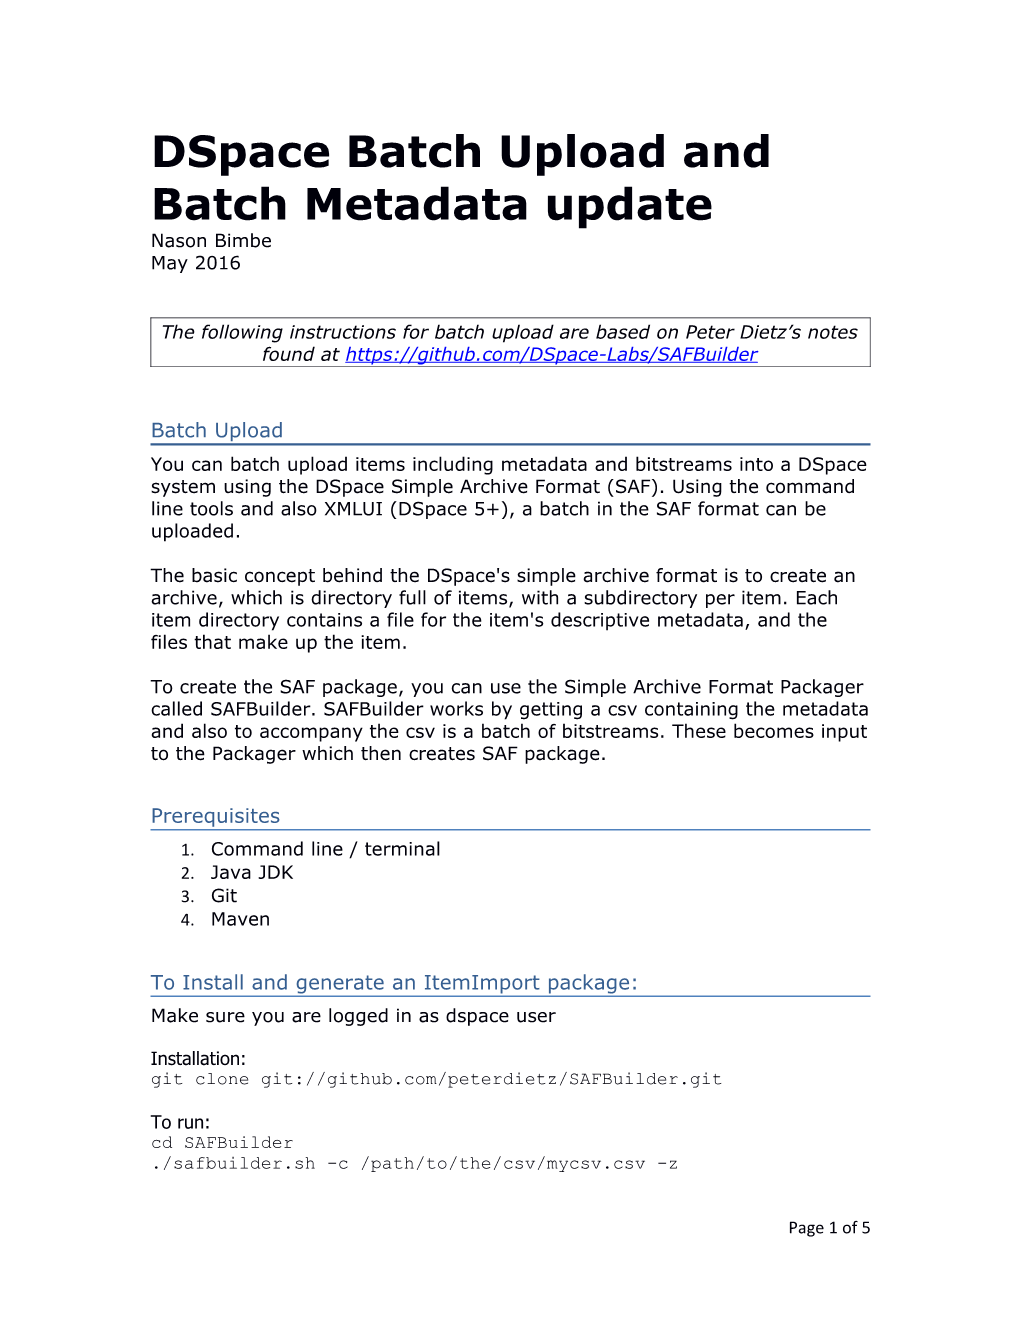 Dspace Batch Upload and Batch Metadata Update